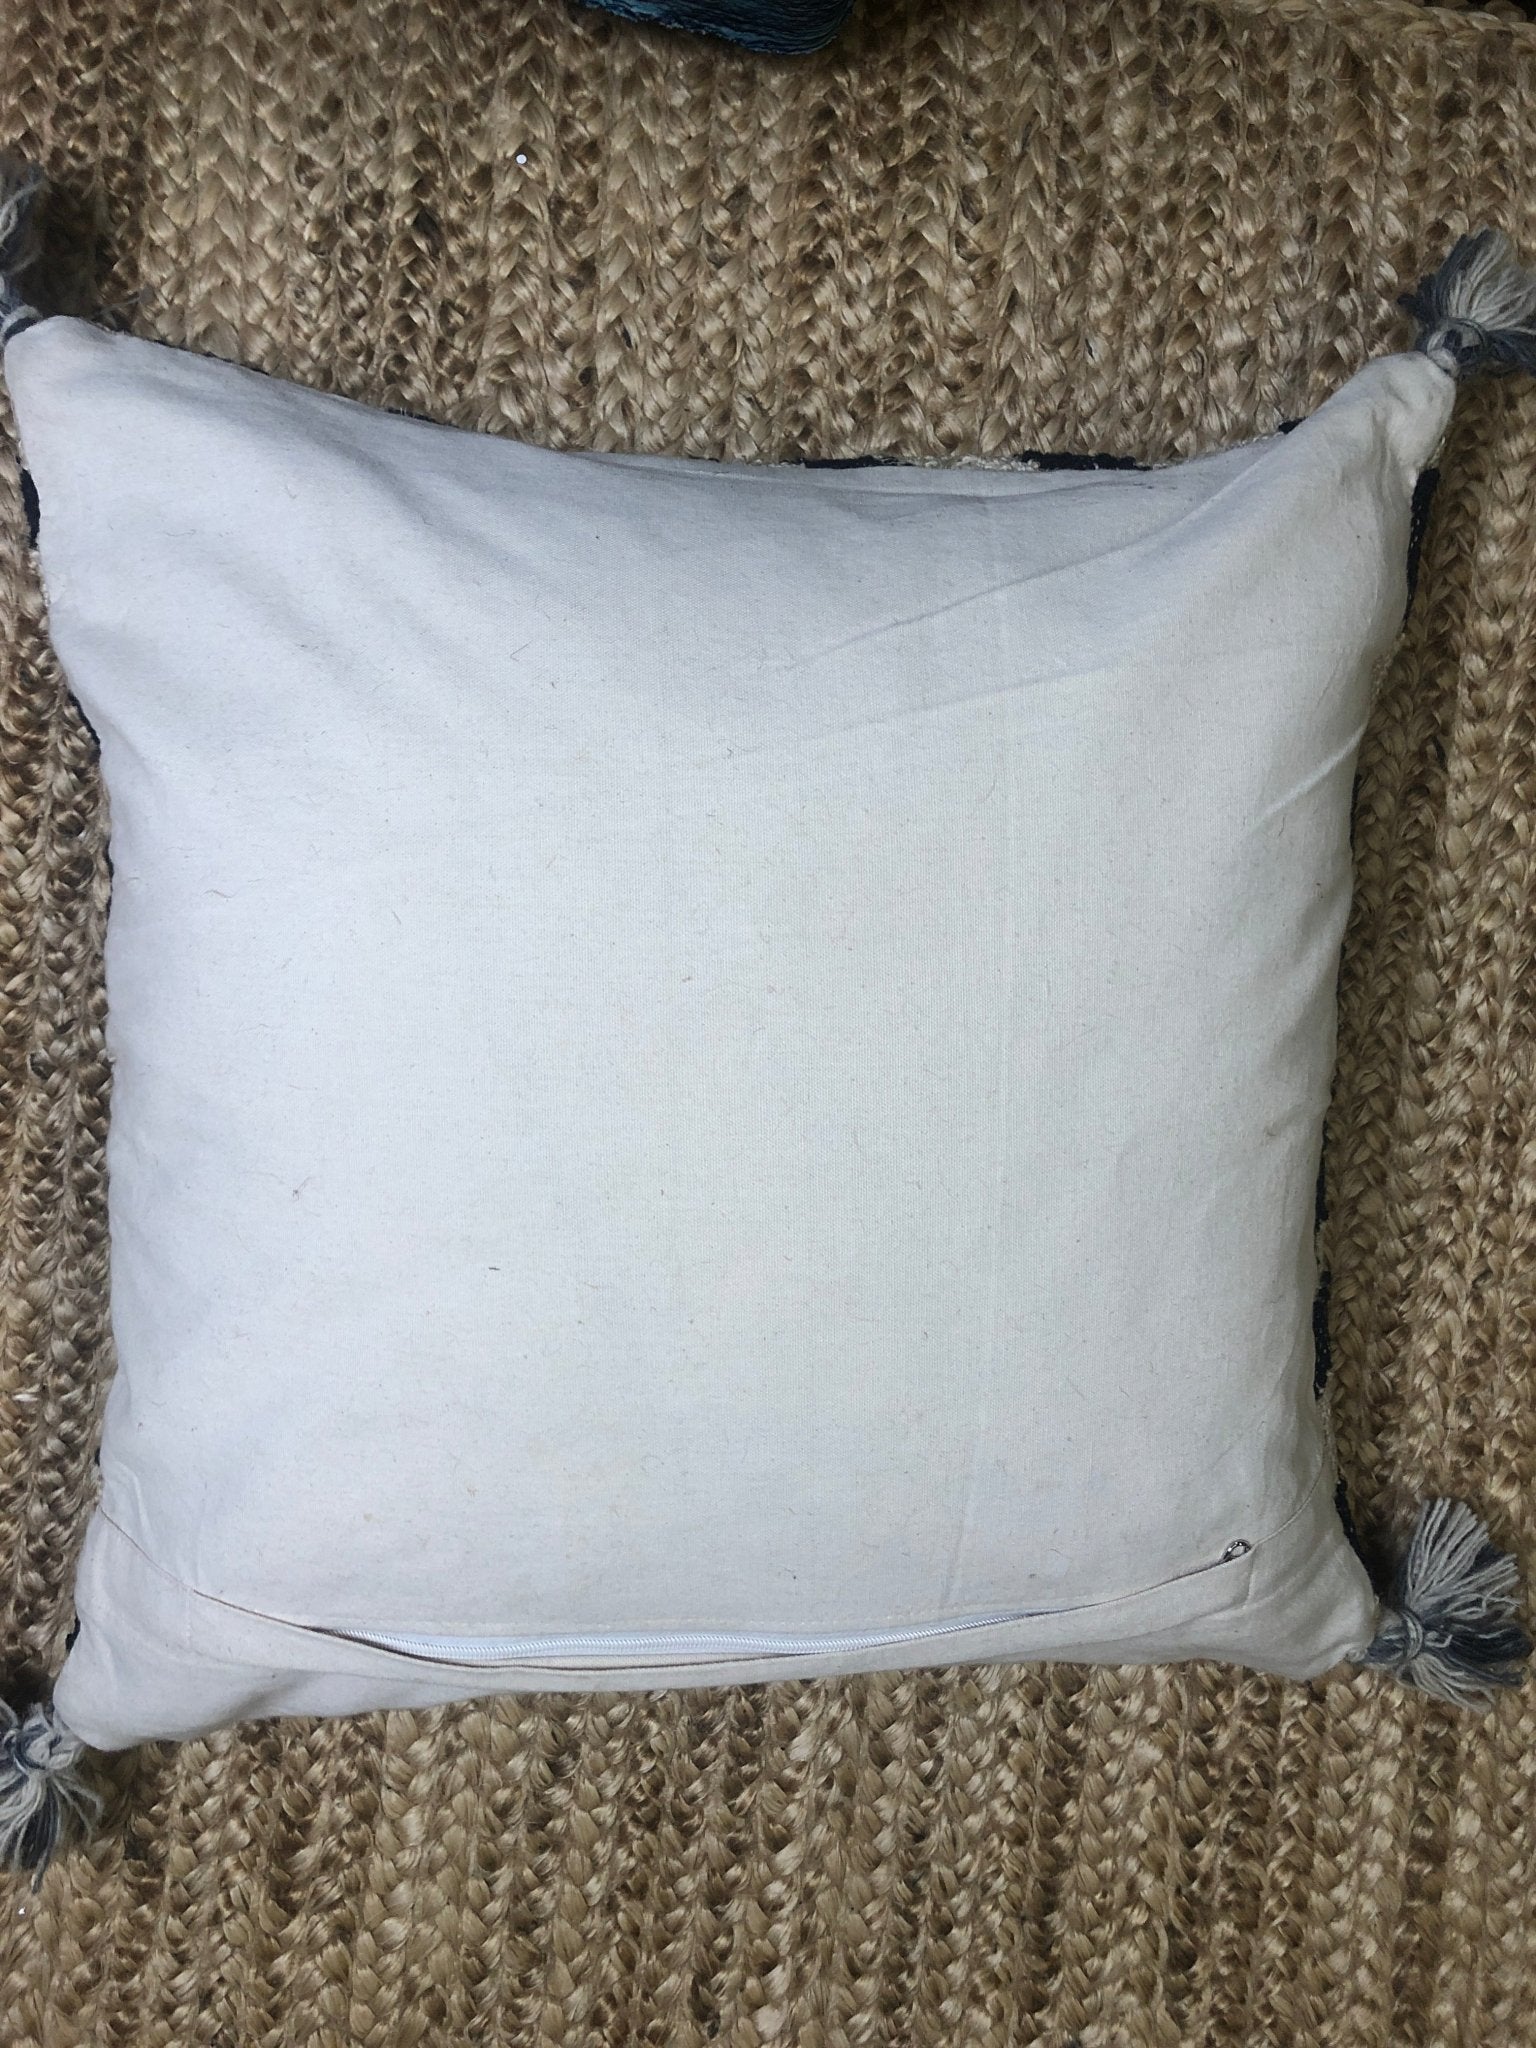 Brittney Spars Natural and Black Jute Tasseled Pillow | Banana Manor Rug Company